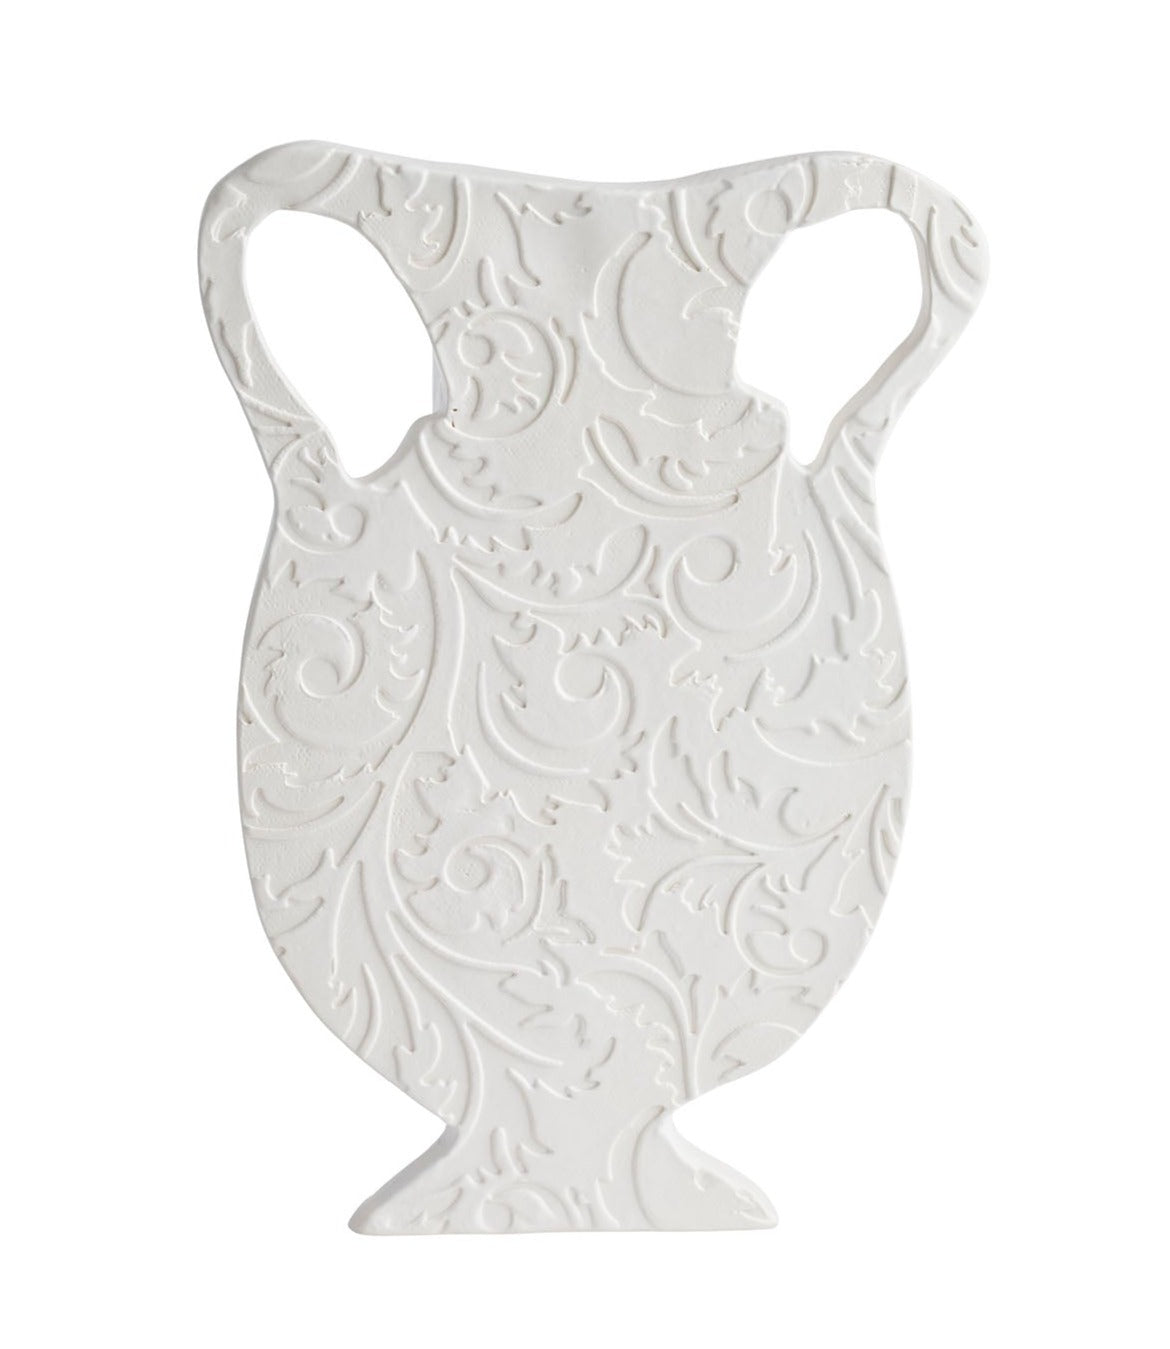 Damask Silhouette Vase